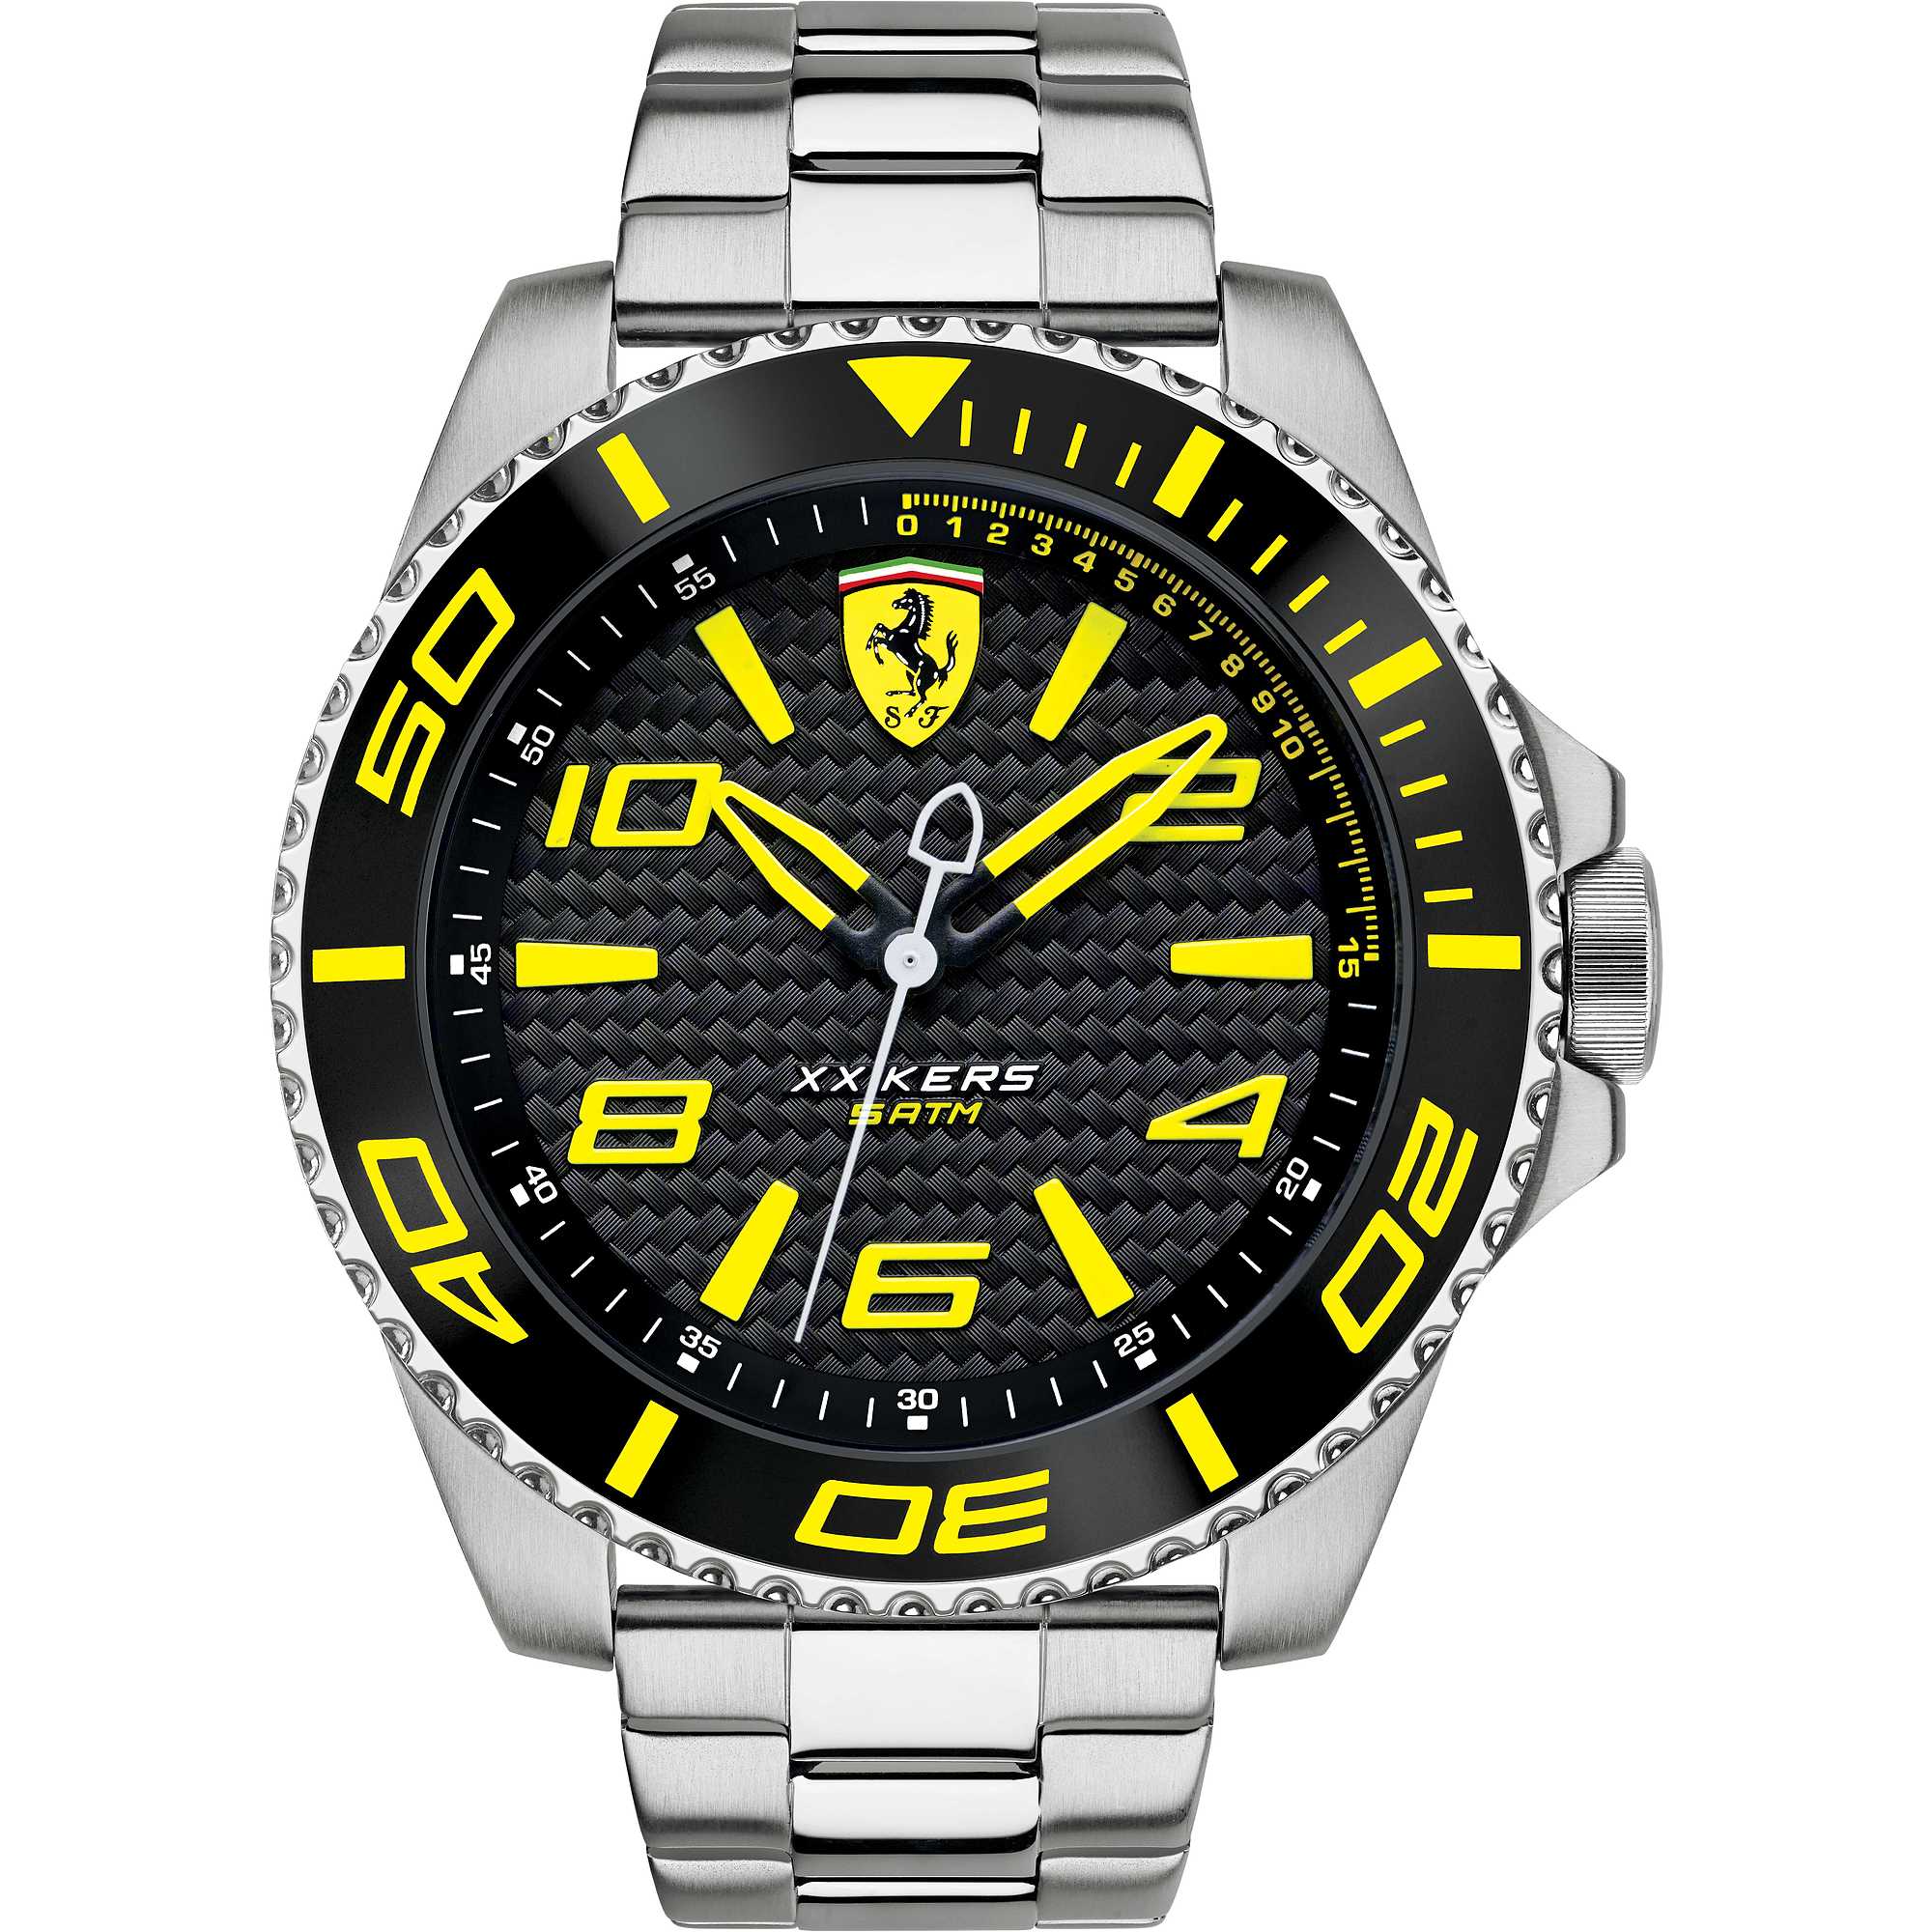 Scuderia Ferrari orologio solo tempo uomo Xx Kers FER0830330 - Orologi Tic  Tac Roma